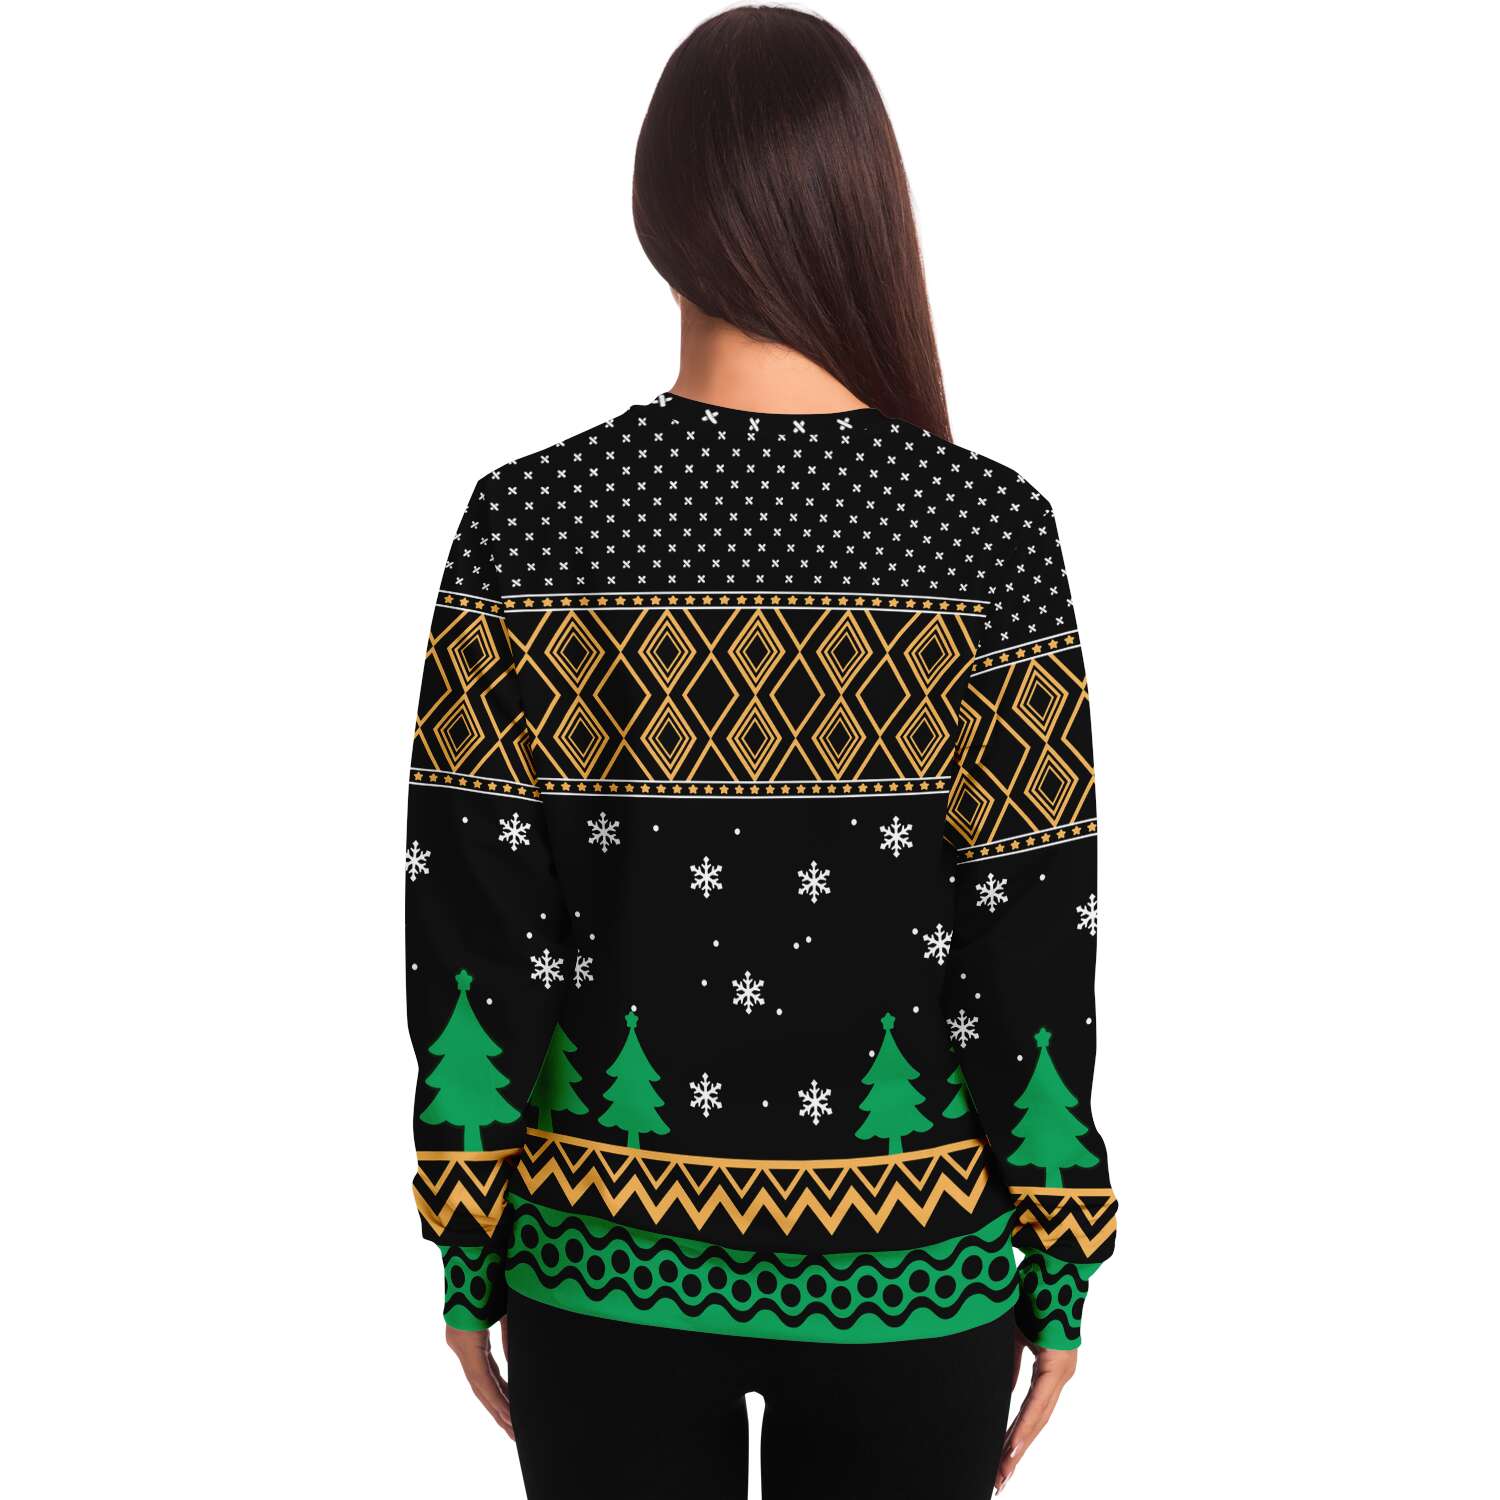 Ugly Christmas Sweater Happy Hoolidays - Chloe Lambertin